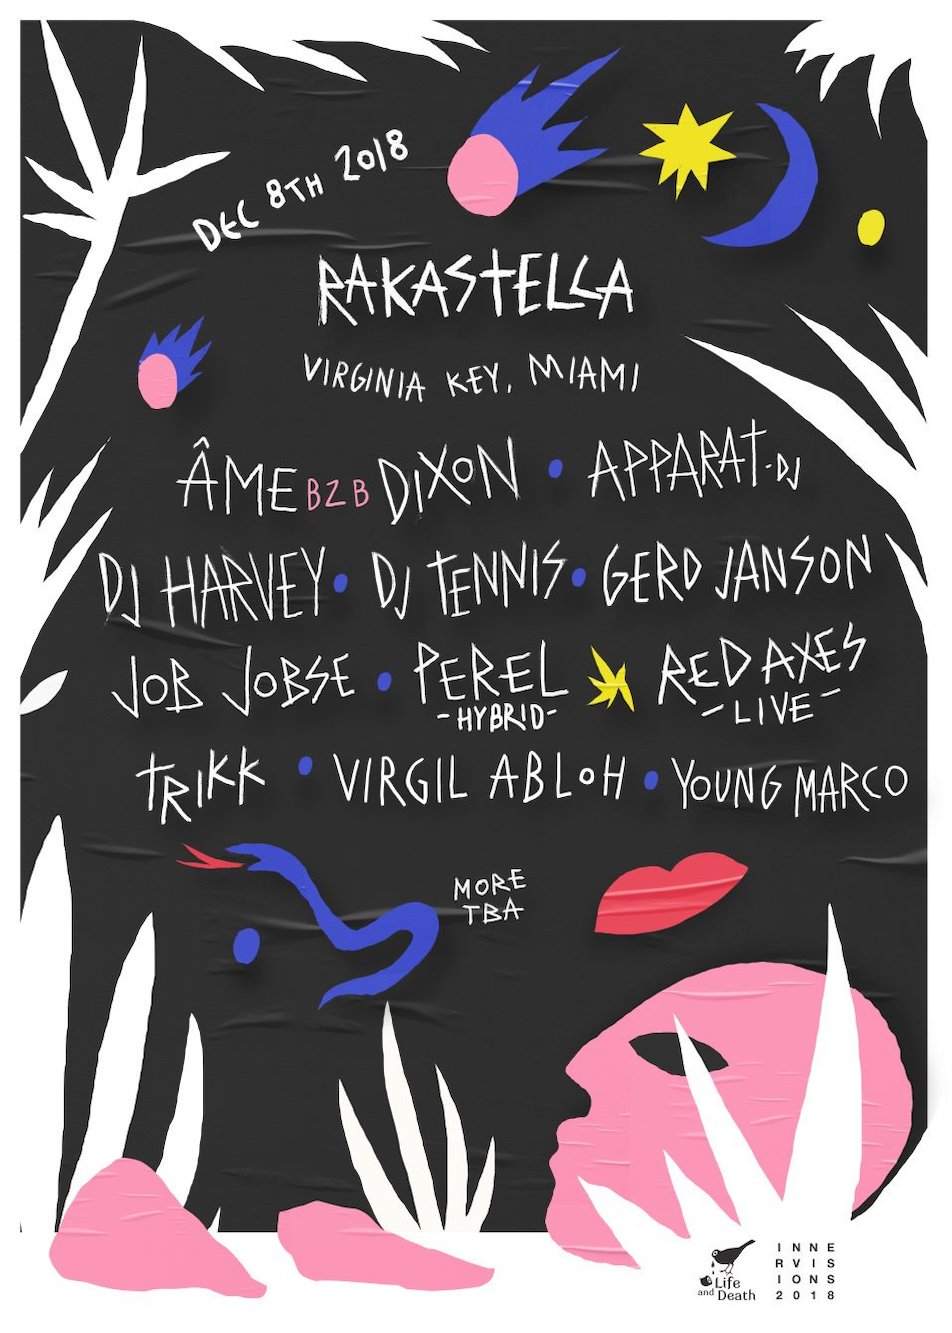 Rakastella in Miami adds Young Marco, Gerd Janson & Virgil Abloh to 2018 lineup image